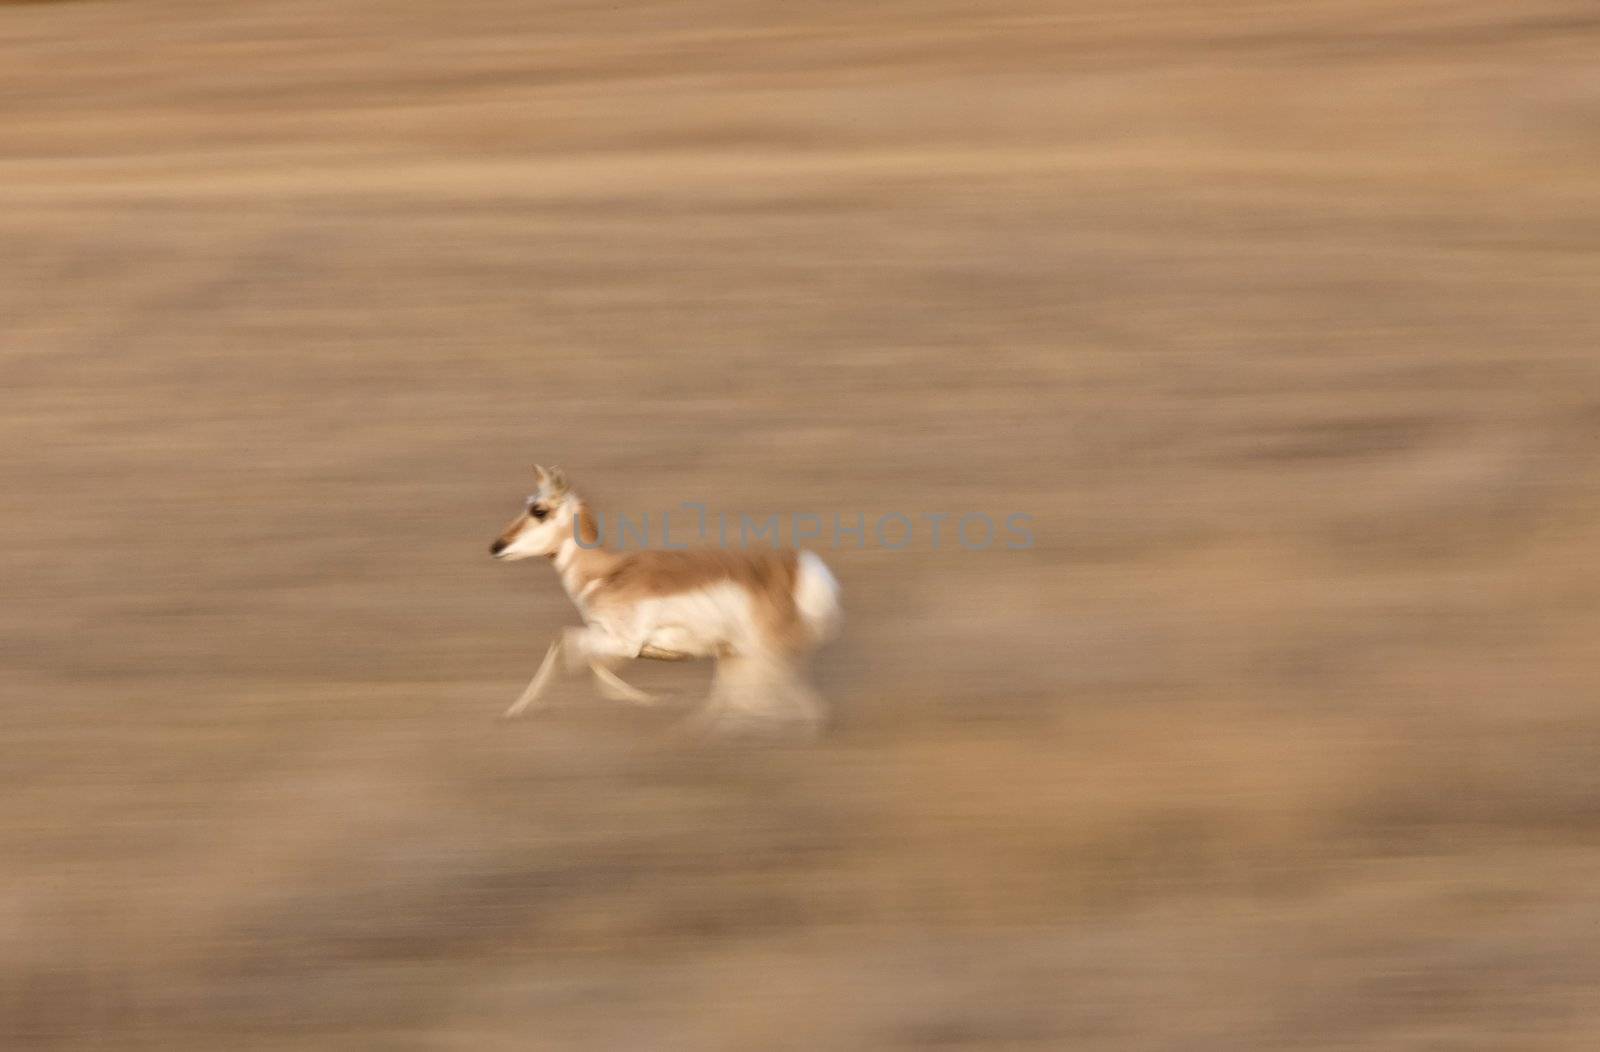 Pronghorn Antelope Saskatchewan Canada